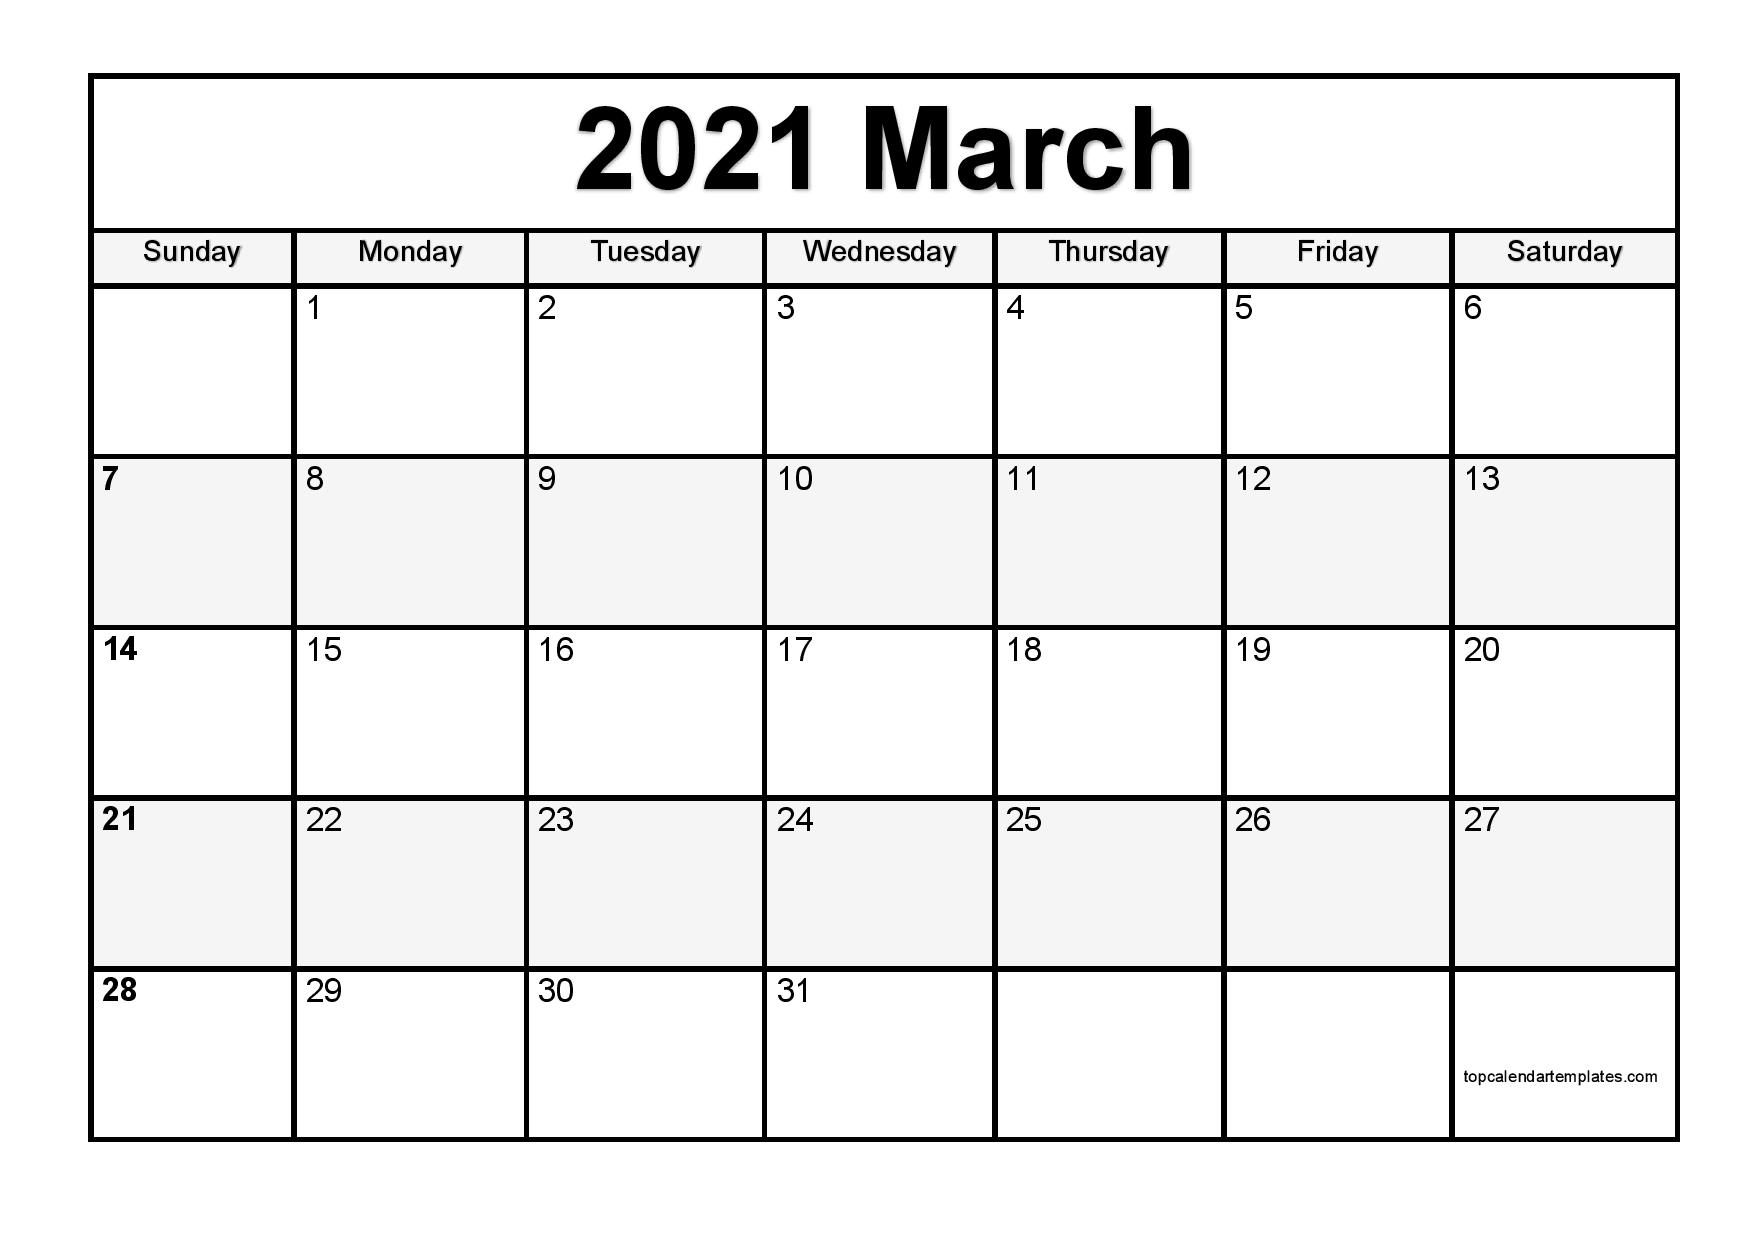 Free March 2021 Printable Calendar In Editable Format